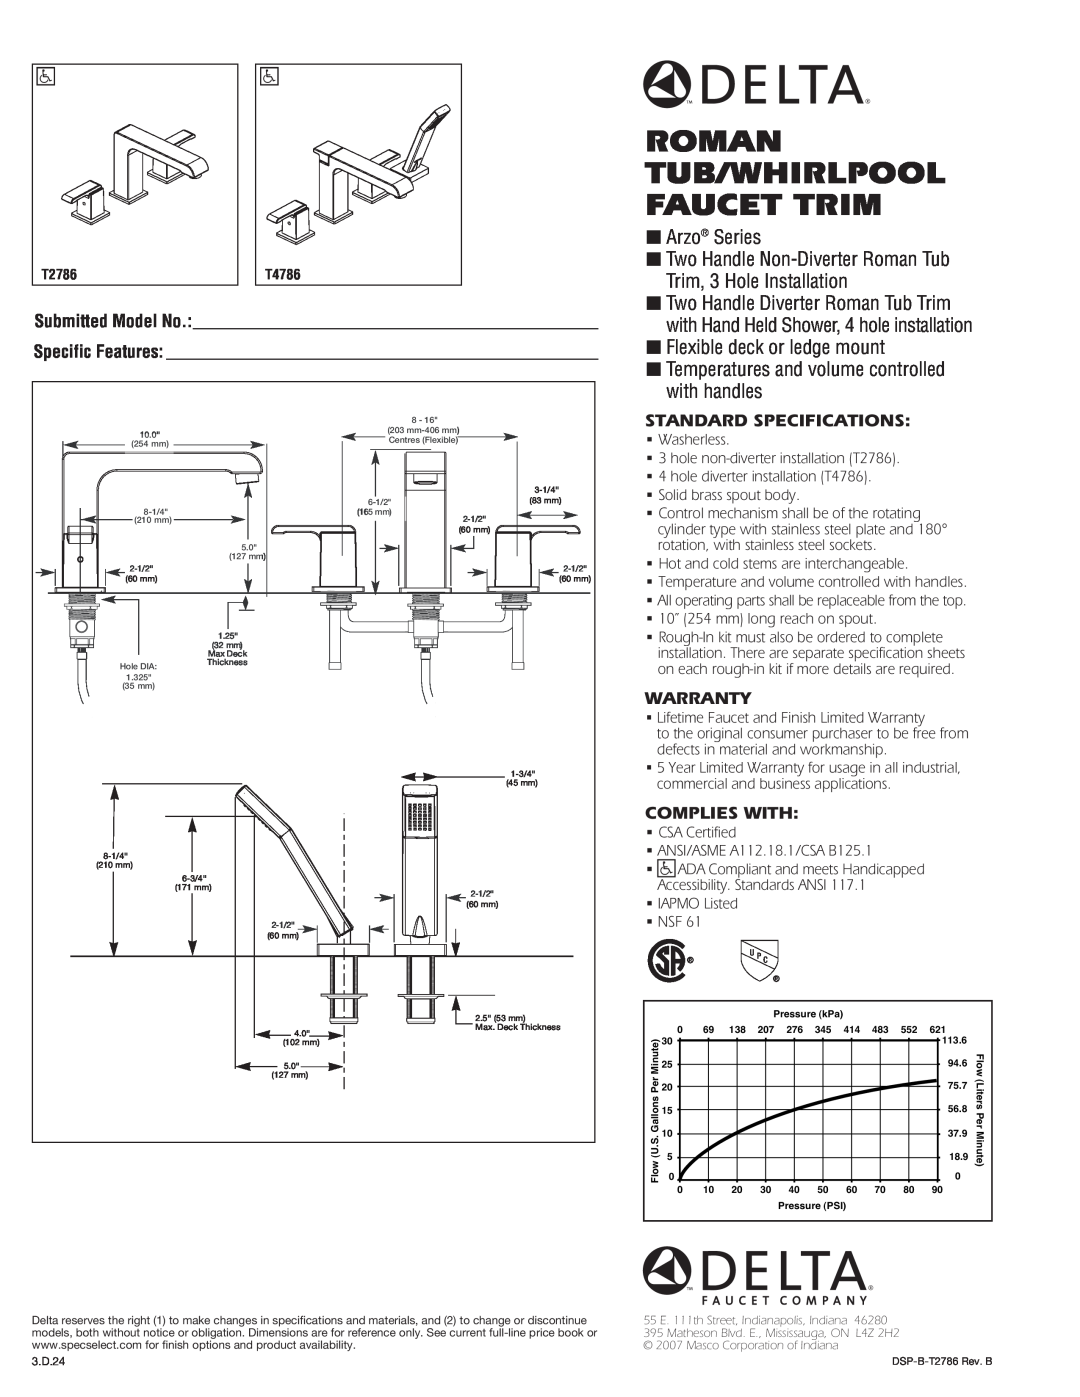 Delta T4786 warranty Roman Tub/Whirlpool Faucet Trim, Arzo Series, Flexible deck or ledge mount, Standard Specifications 